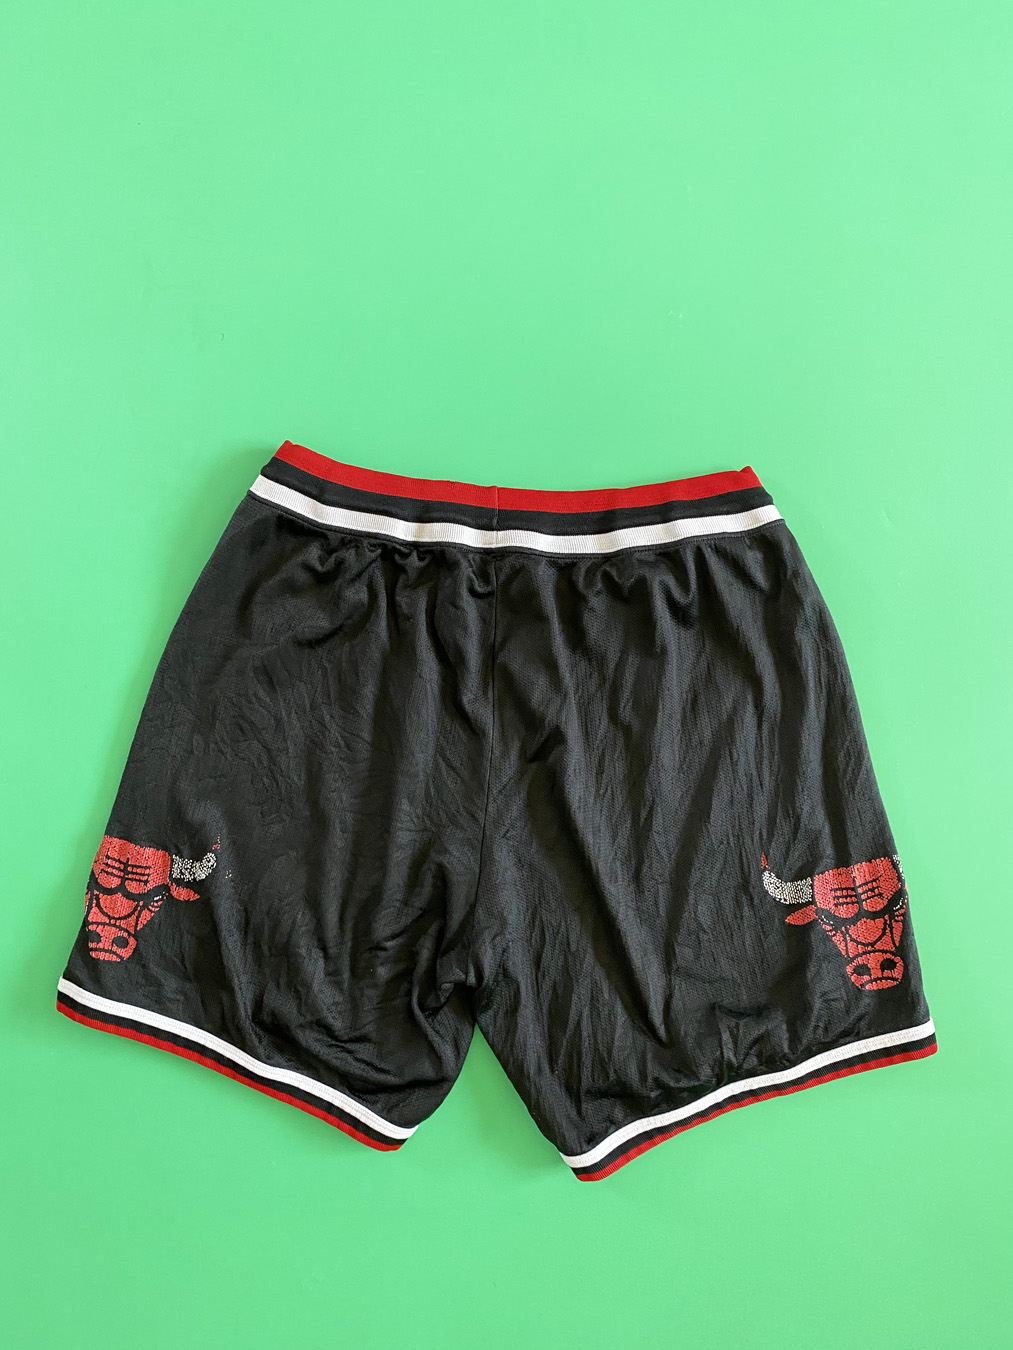 Vintage Vintage 90s, Chicago Bulls, NBA Shorts, Champion